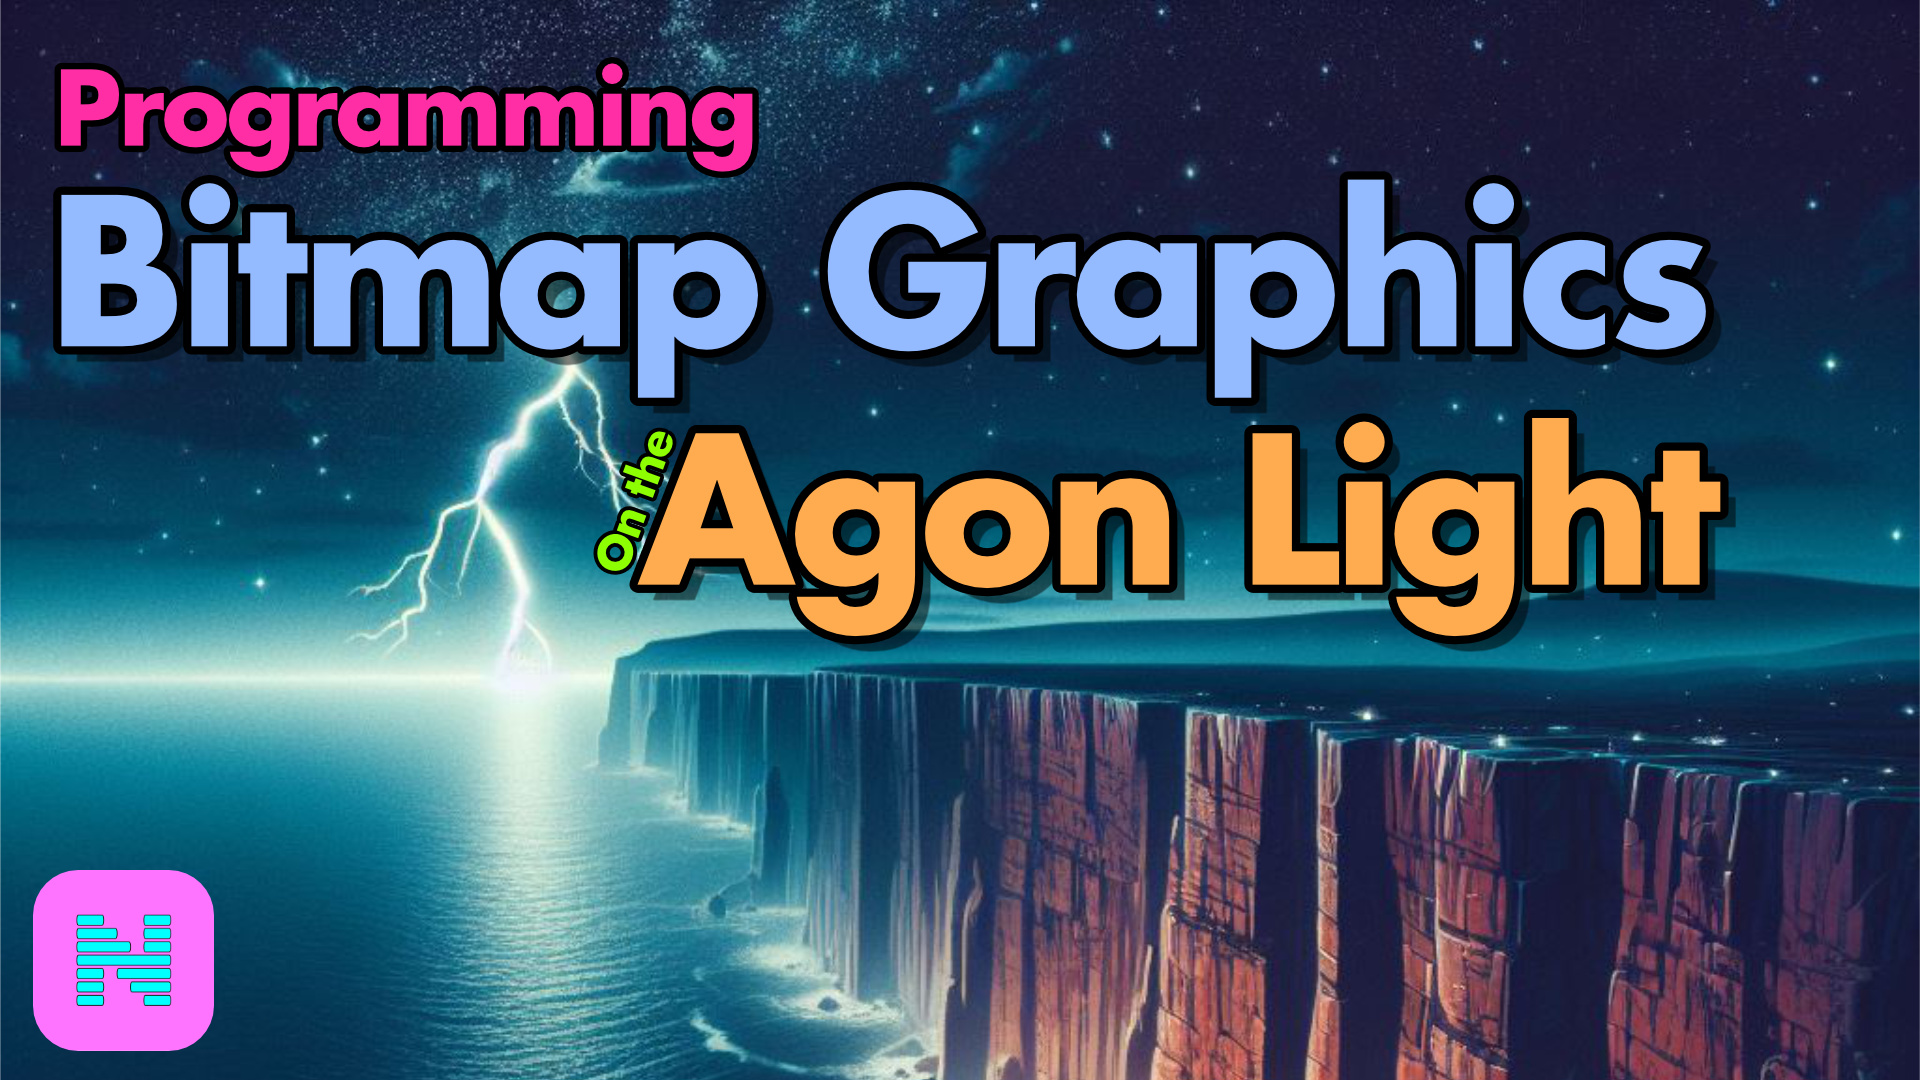 Programming Bitmap Graphics – Agon Light using C